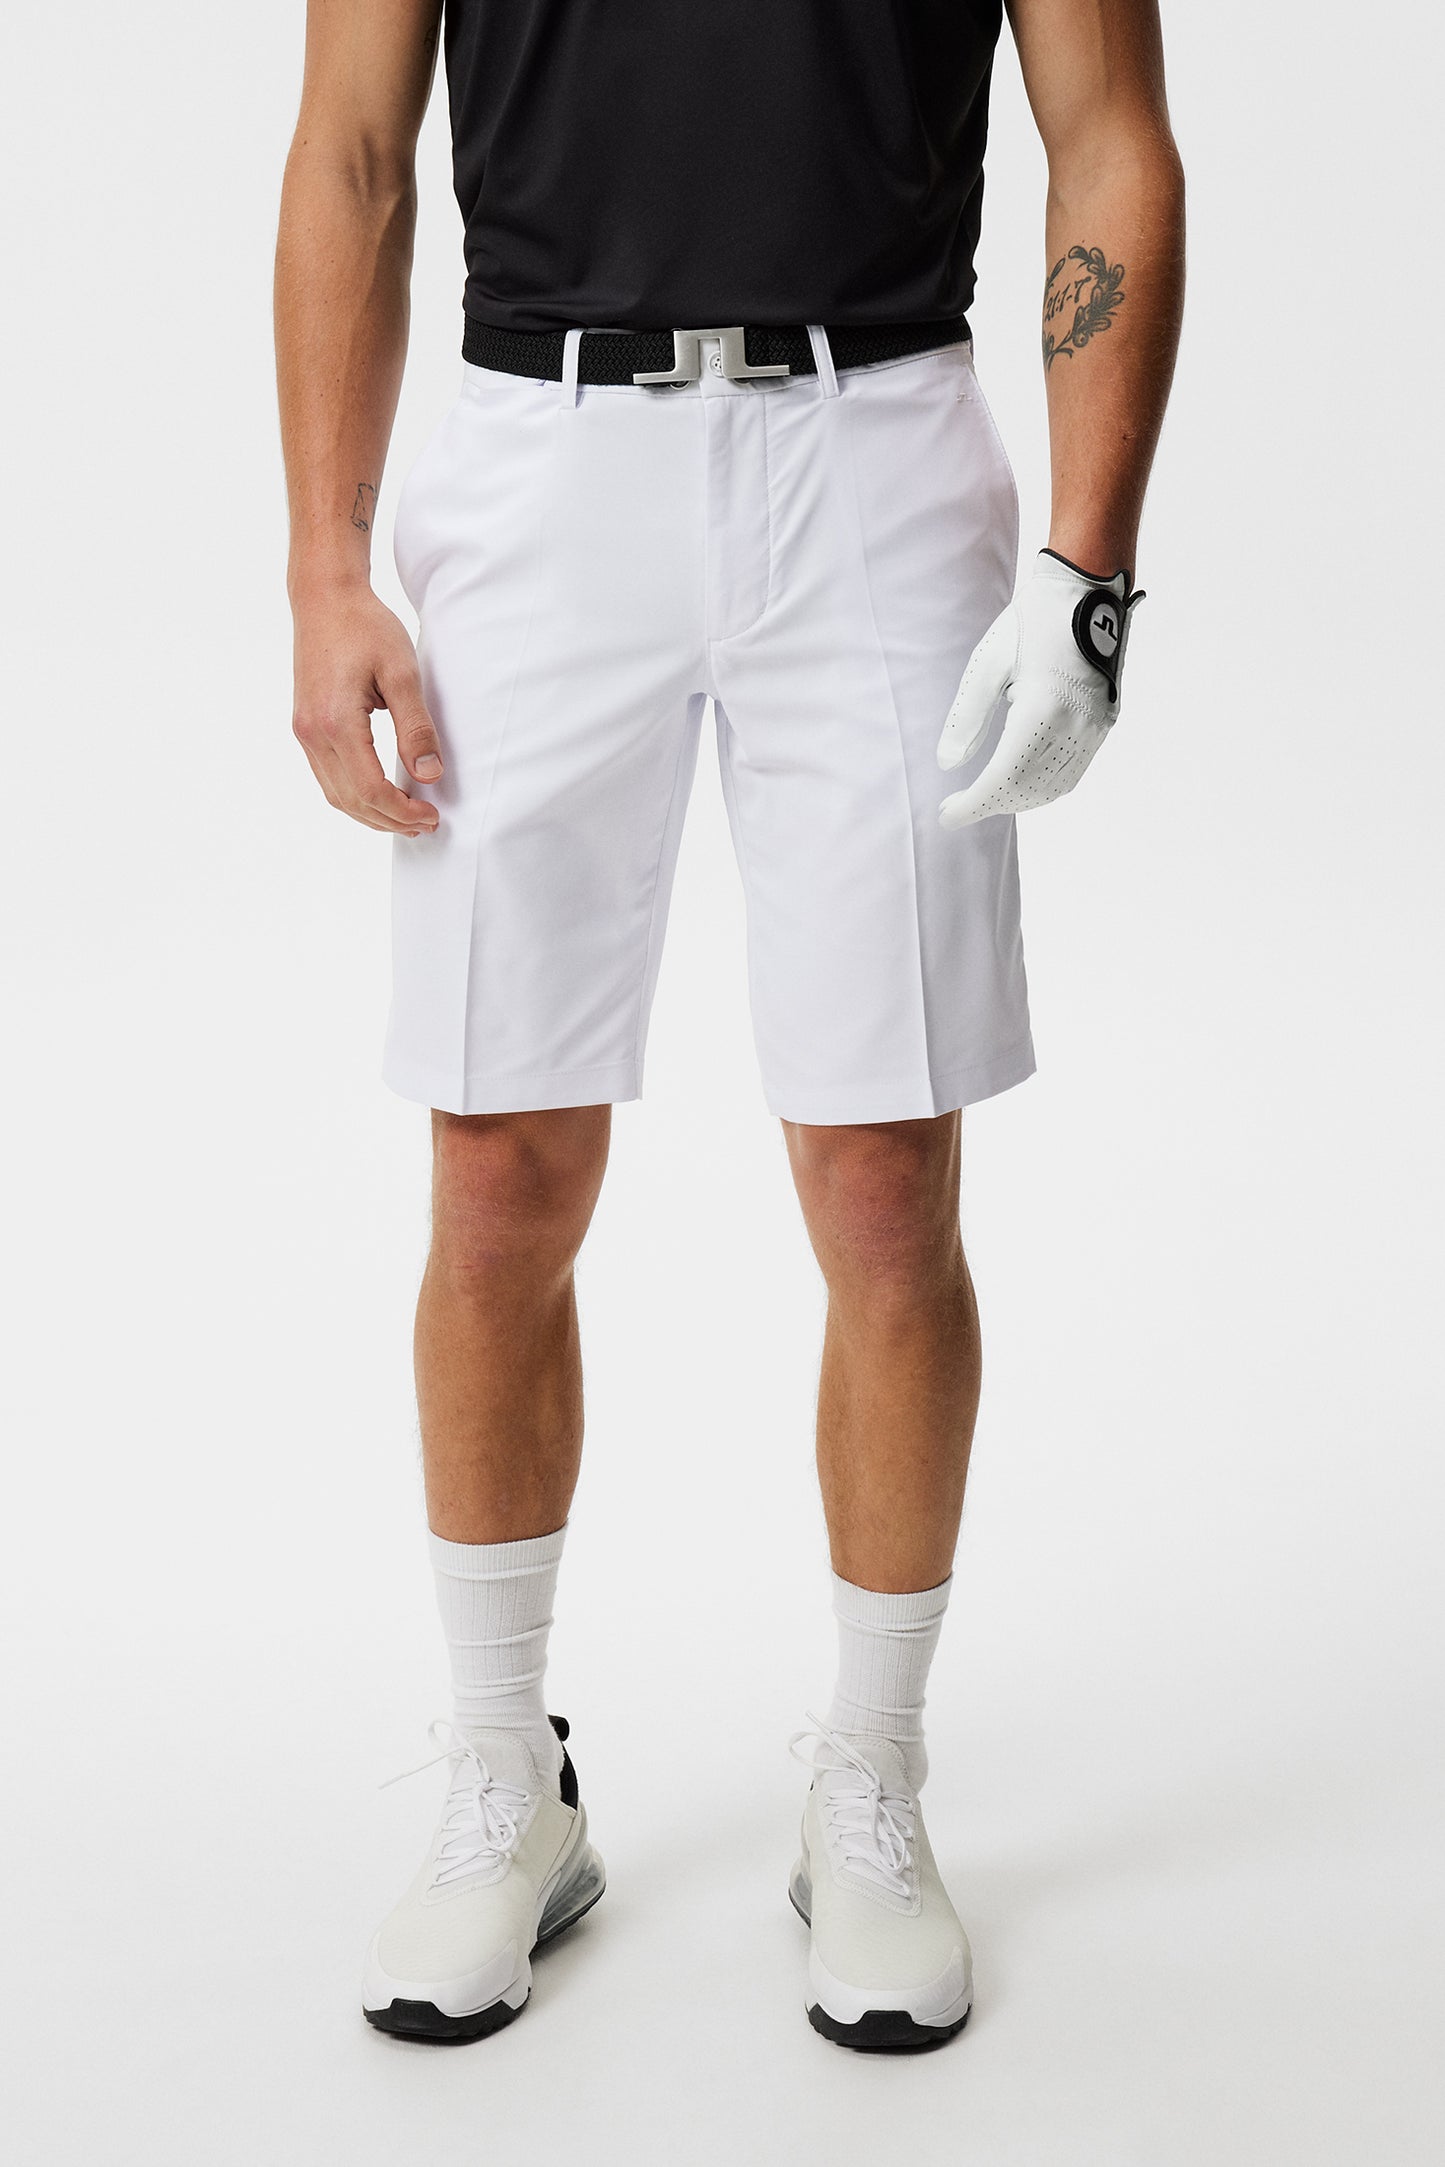 Somle Shorts / White